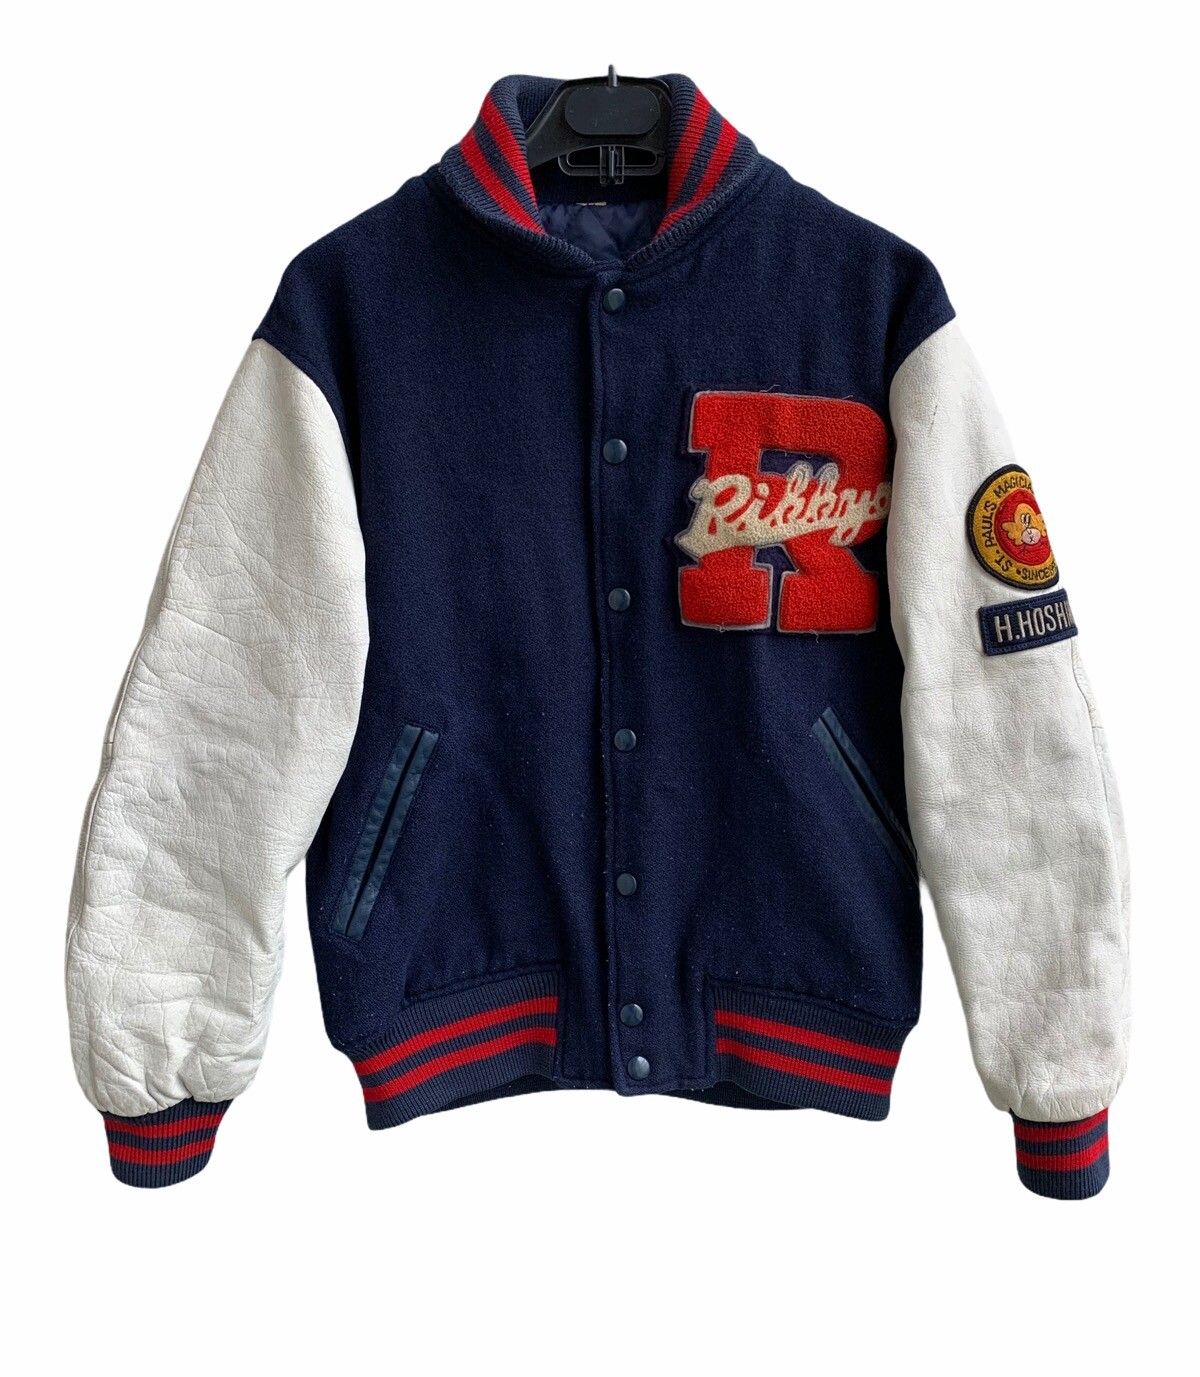 NBA Vintage Wool Varsity Leather Sleeves Jacket Size US S / EU 44-46 / 1 - 1 Preview